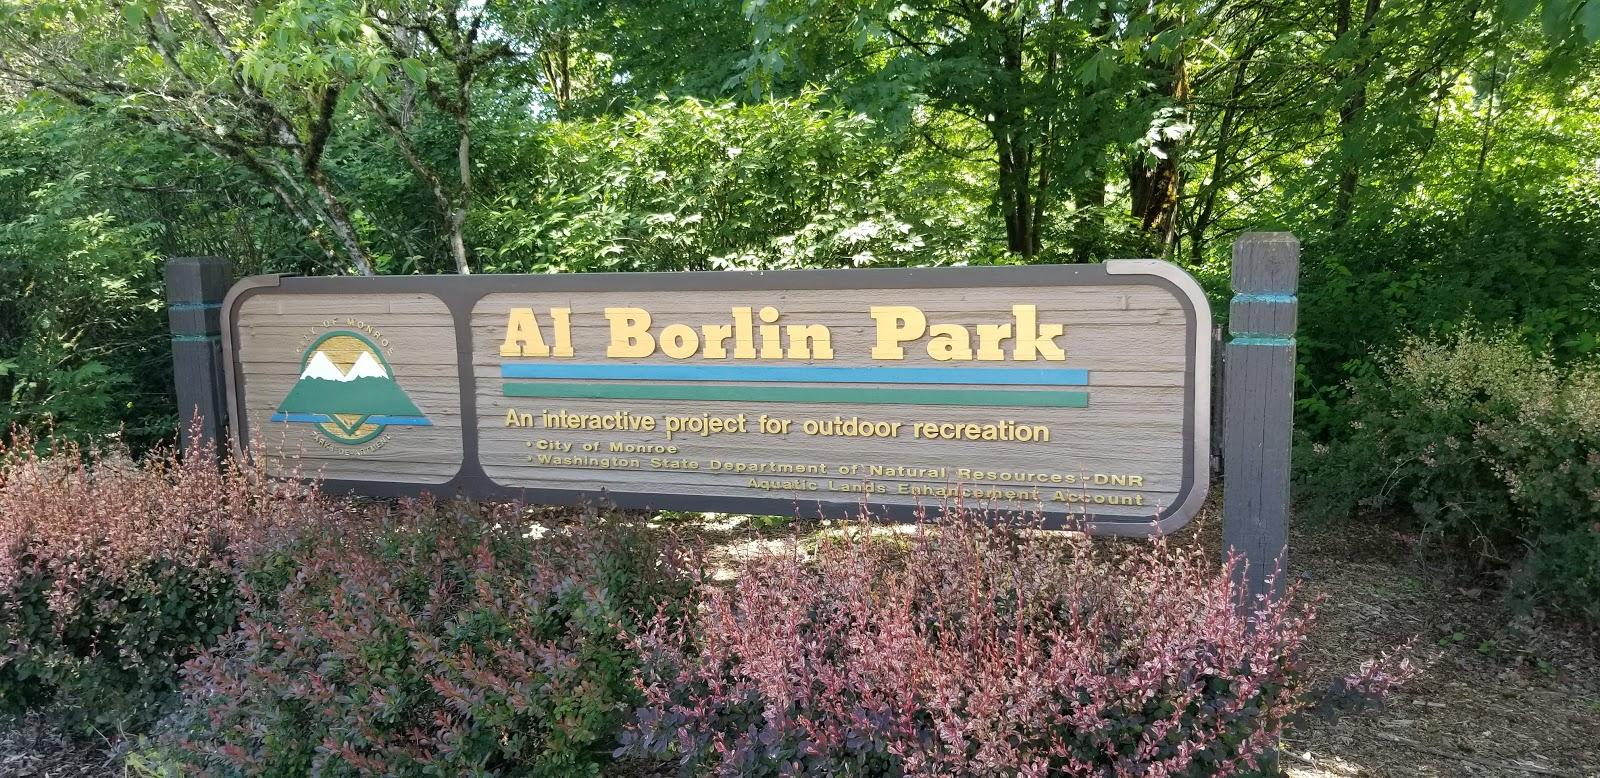 Sandee - Al Borlin Park